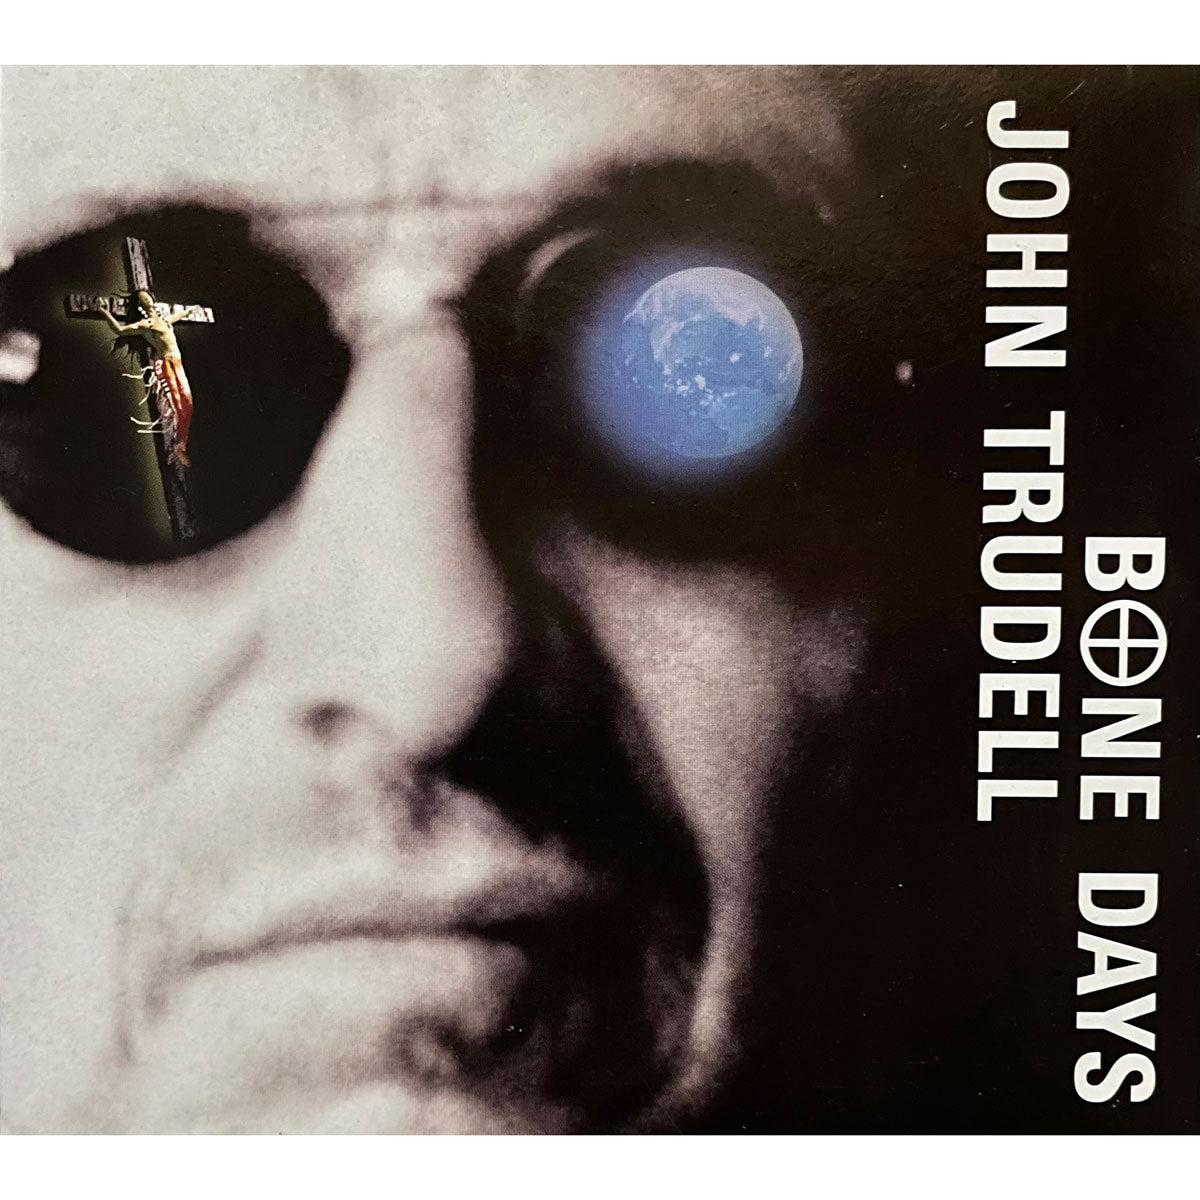 JOHN TRUDELL Bone Days CD